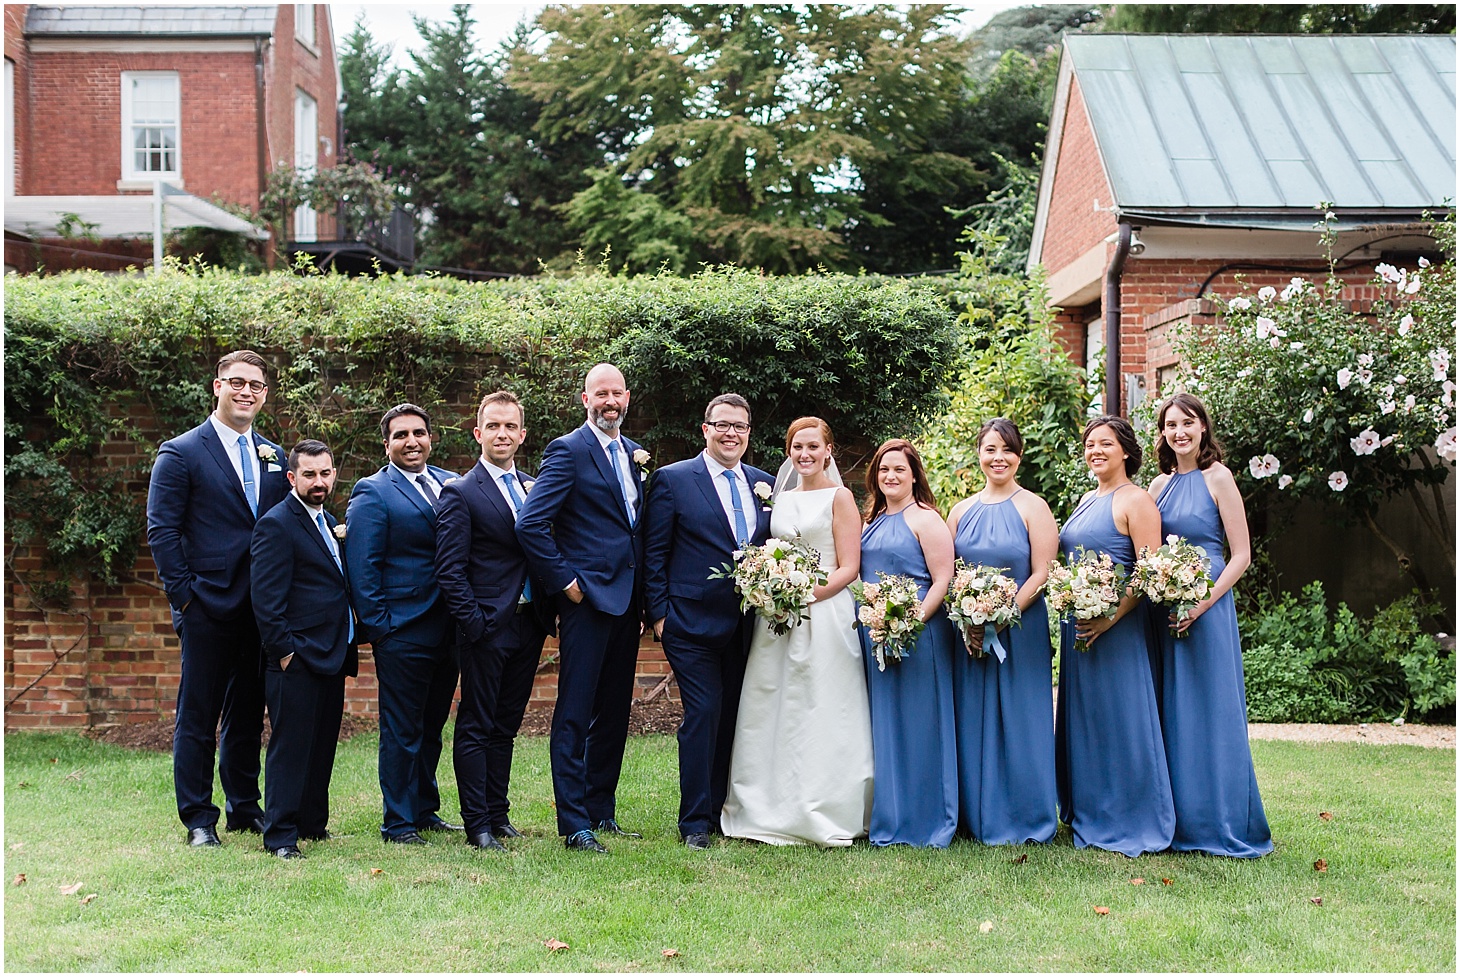 Wedding Party at Dumbarton House | French-Inspired Garden Wedding at Dumbarton House in Georgetown | Sarah Bradshaw Photography | DC Wedding Photographer